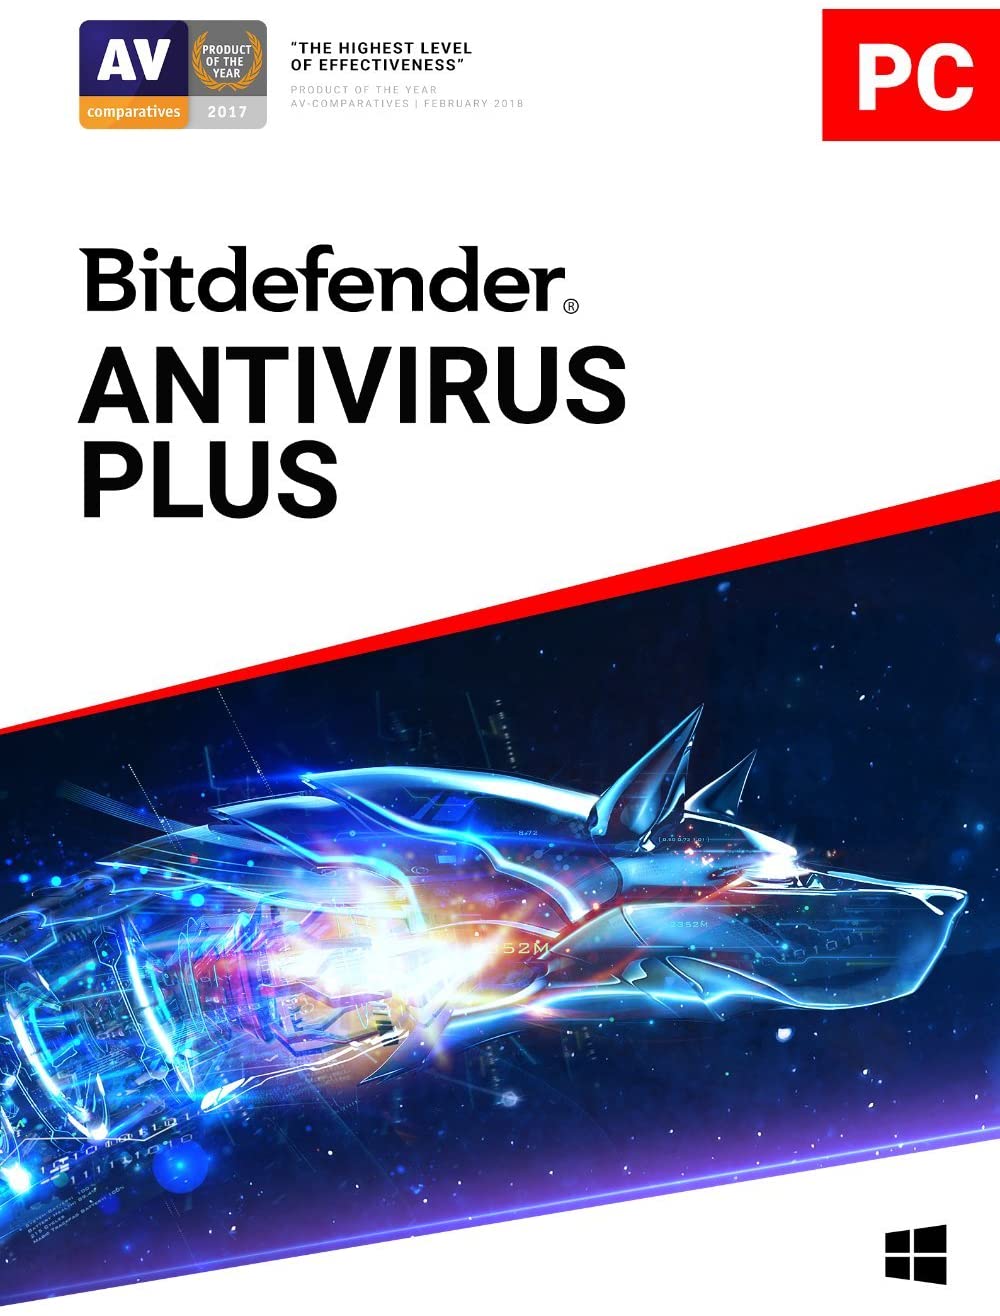 bitdefender antivirus for mac sale